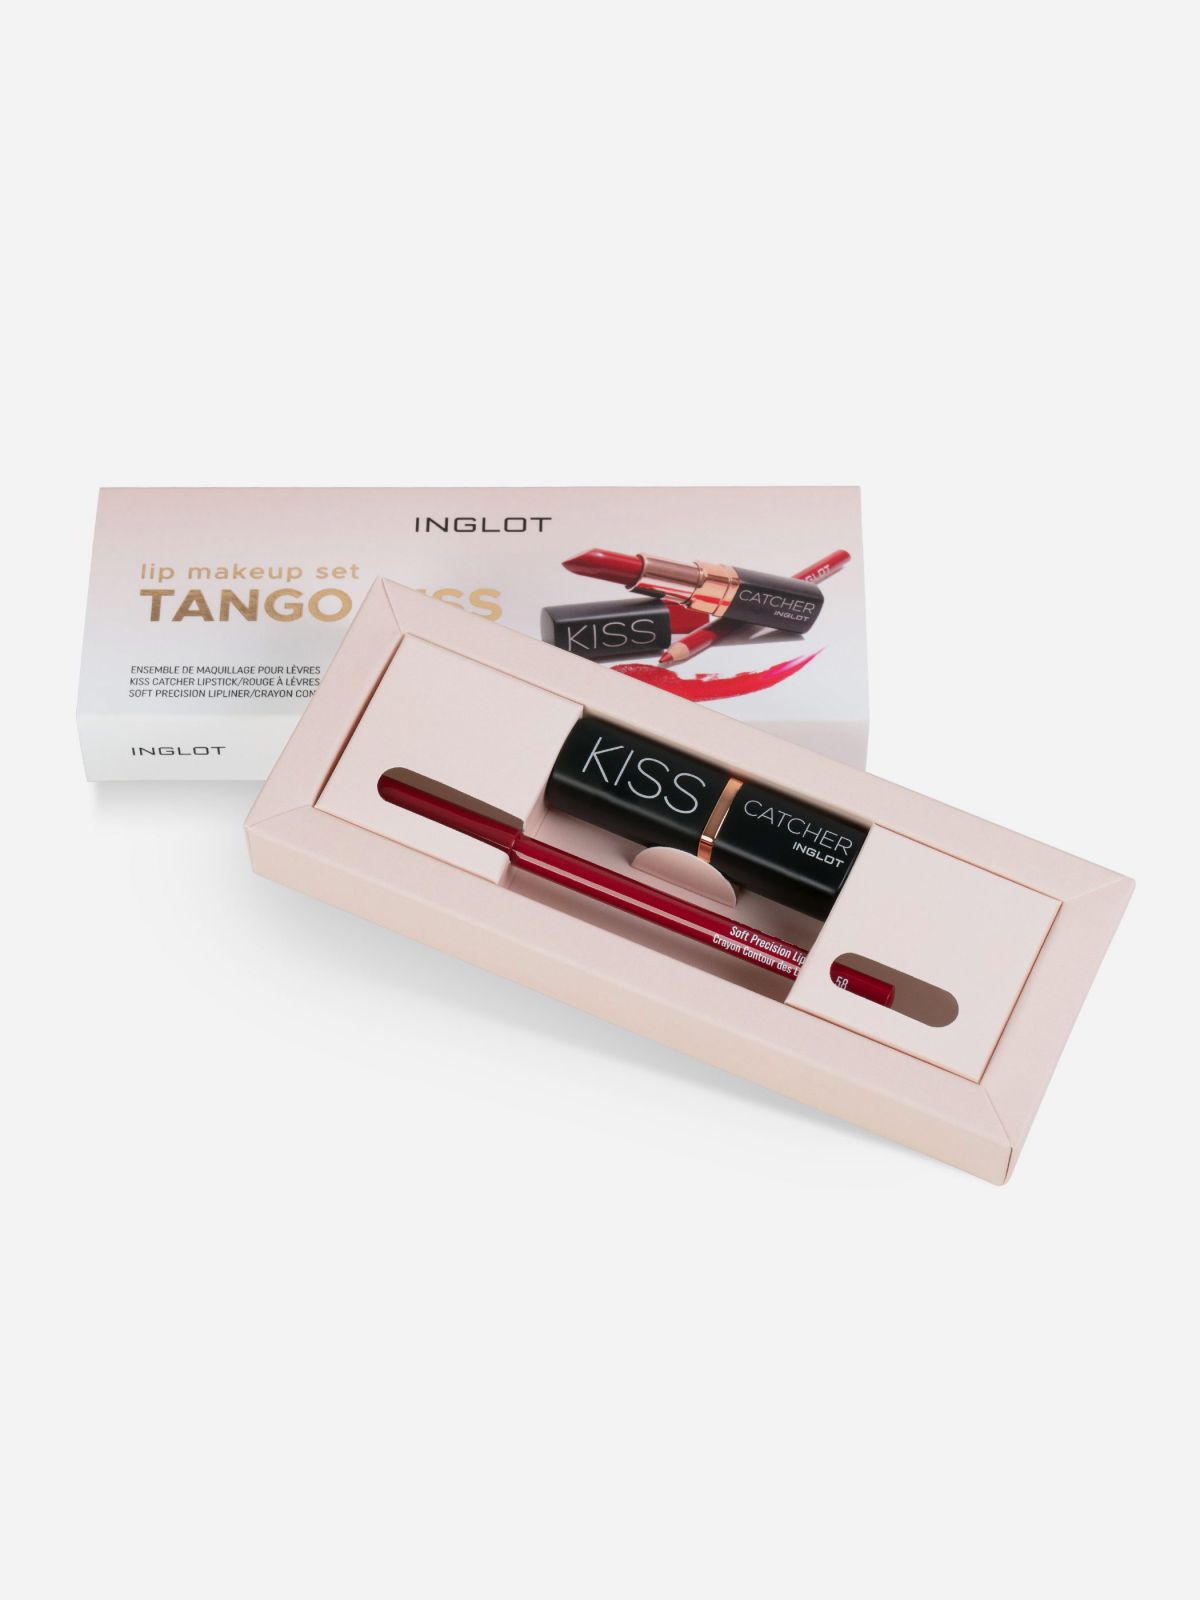  Inglot Lip Makeup Set Tango Kiss סט שפתון עשיר בלחות ועפרון שפתיים במרקם קרמי של INGLOT